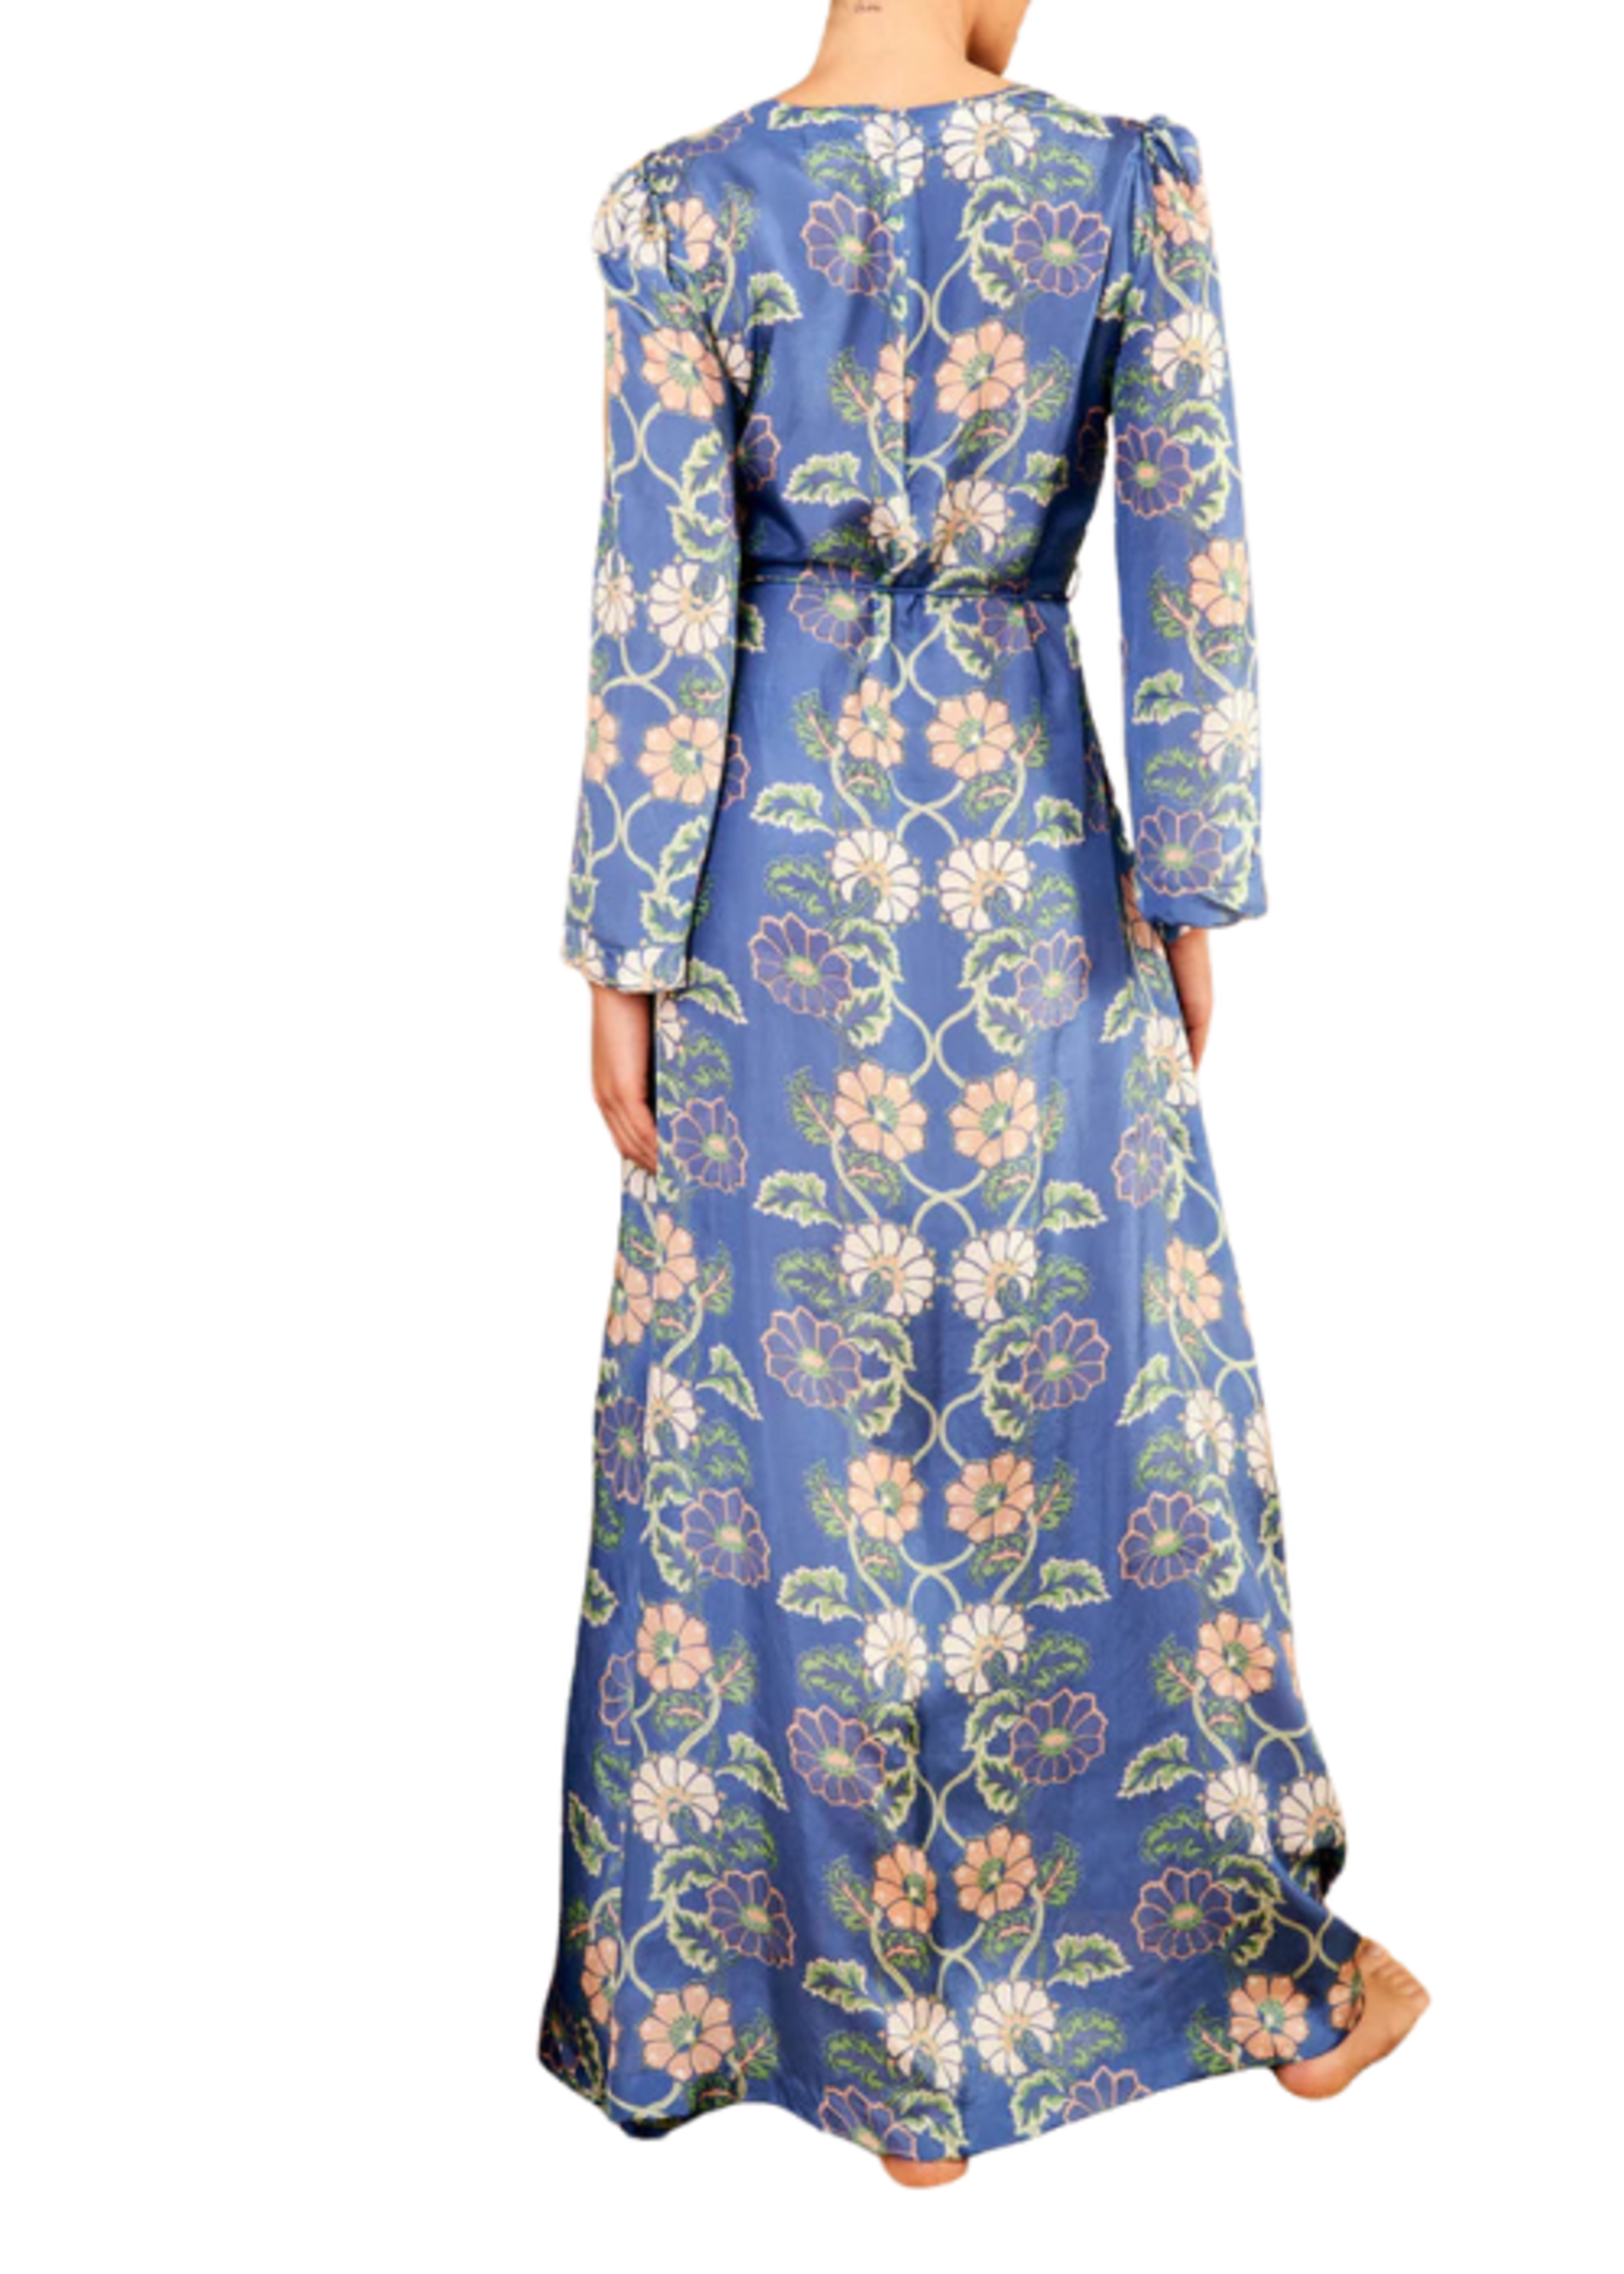 HANNAH ARTWEAR MARIANNA DRESS